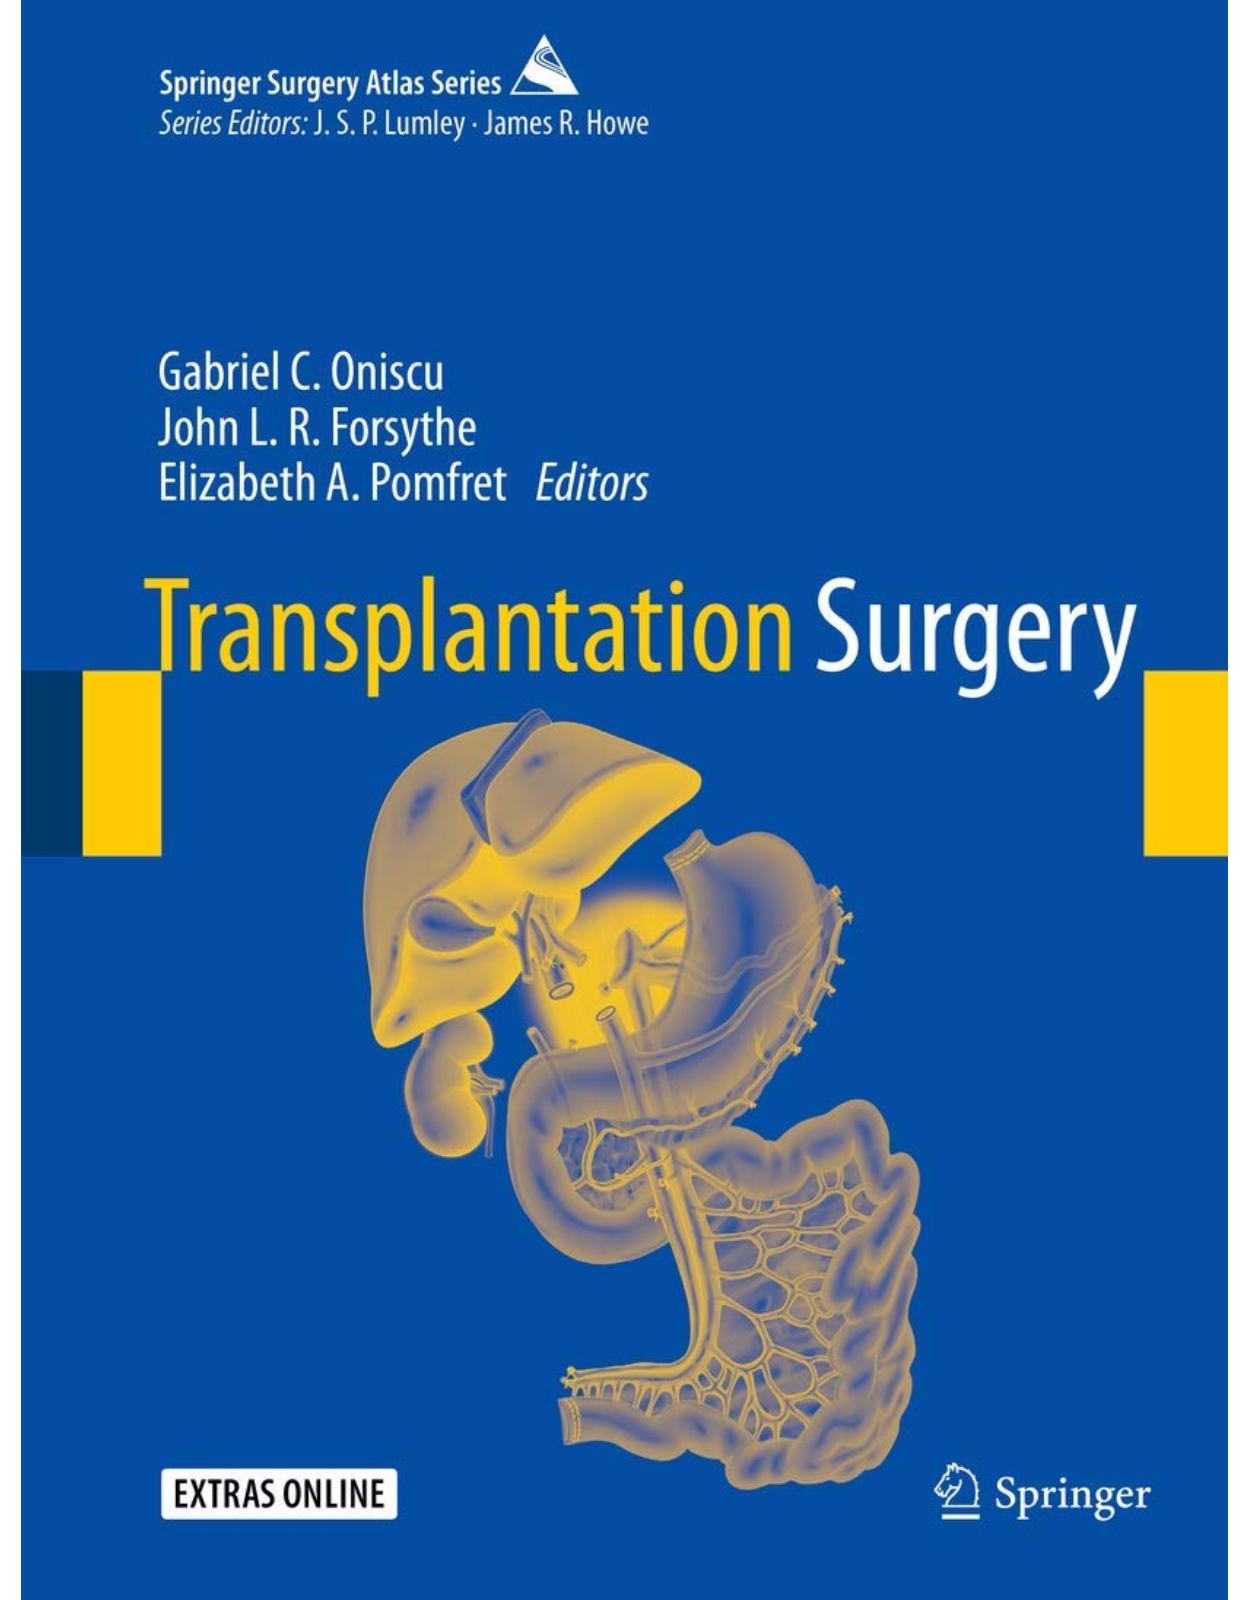 Transplantation Surgery (Springer Surgery Atlas Series)